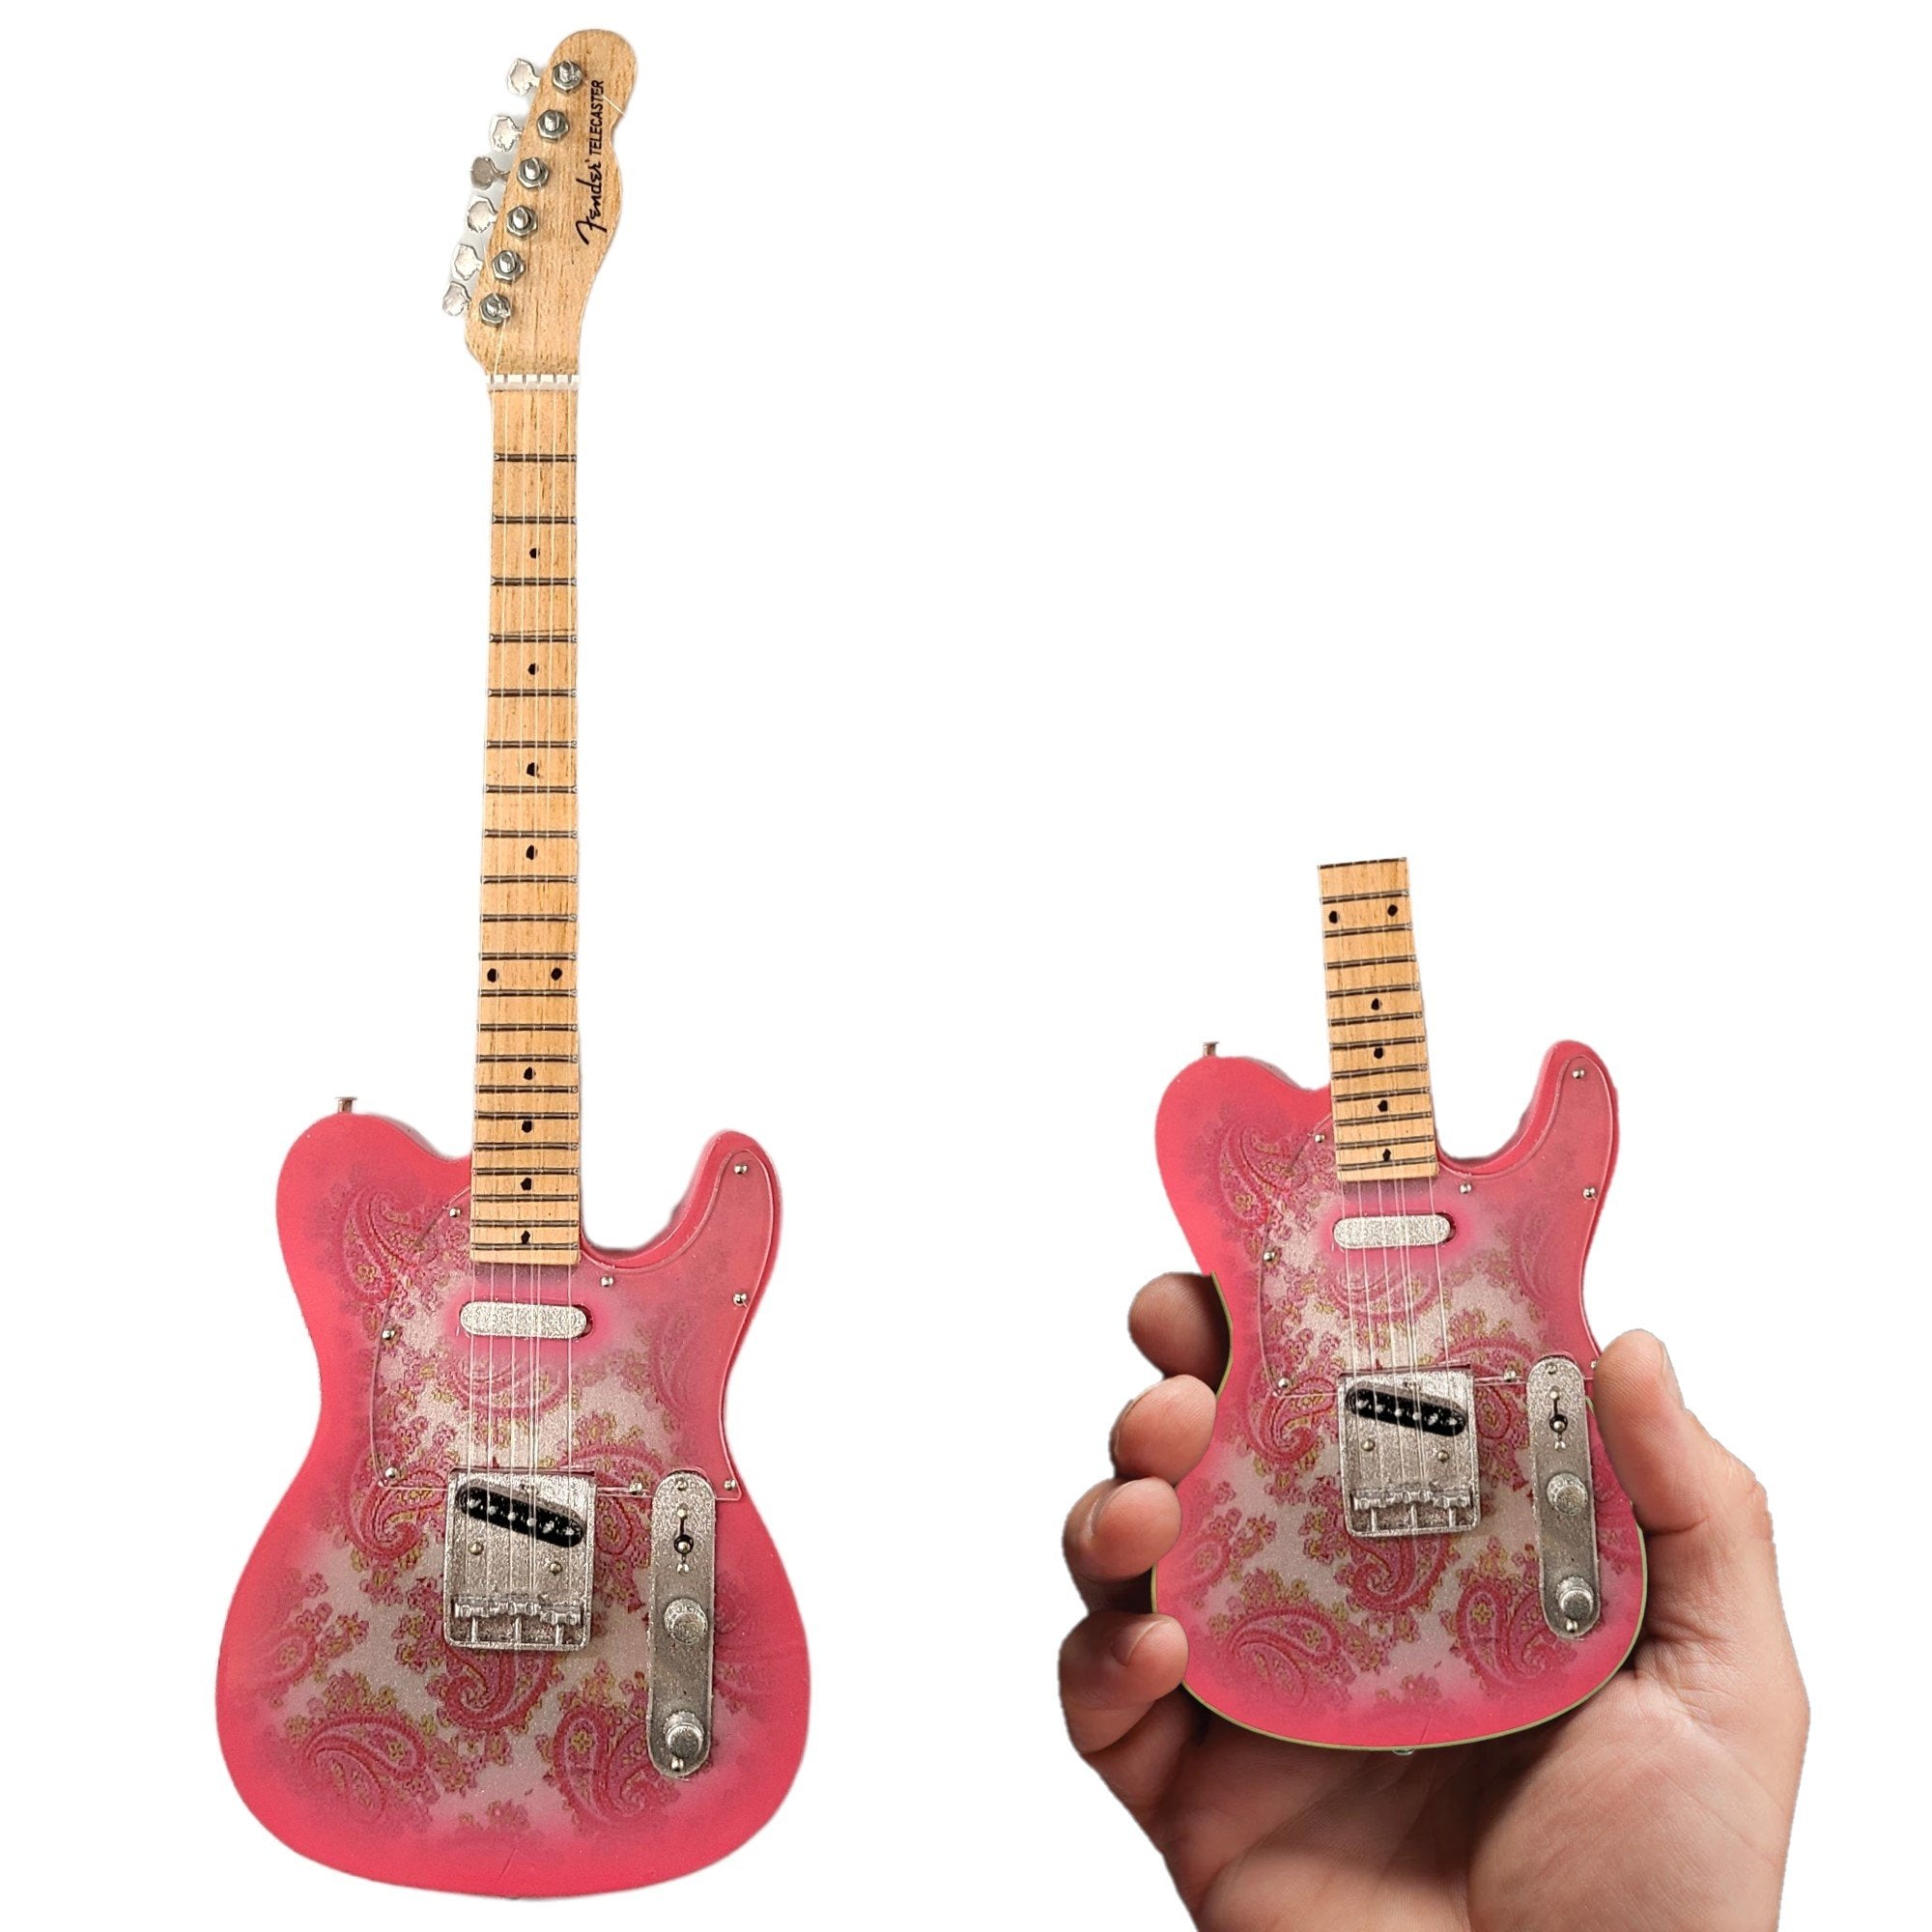 Axe Heaven Pink Paisley Fender Telecaster Mini Guitar Replica FT-005